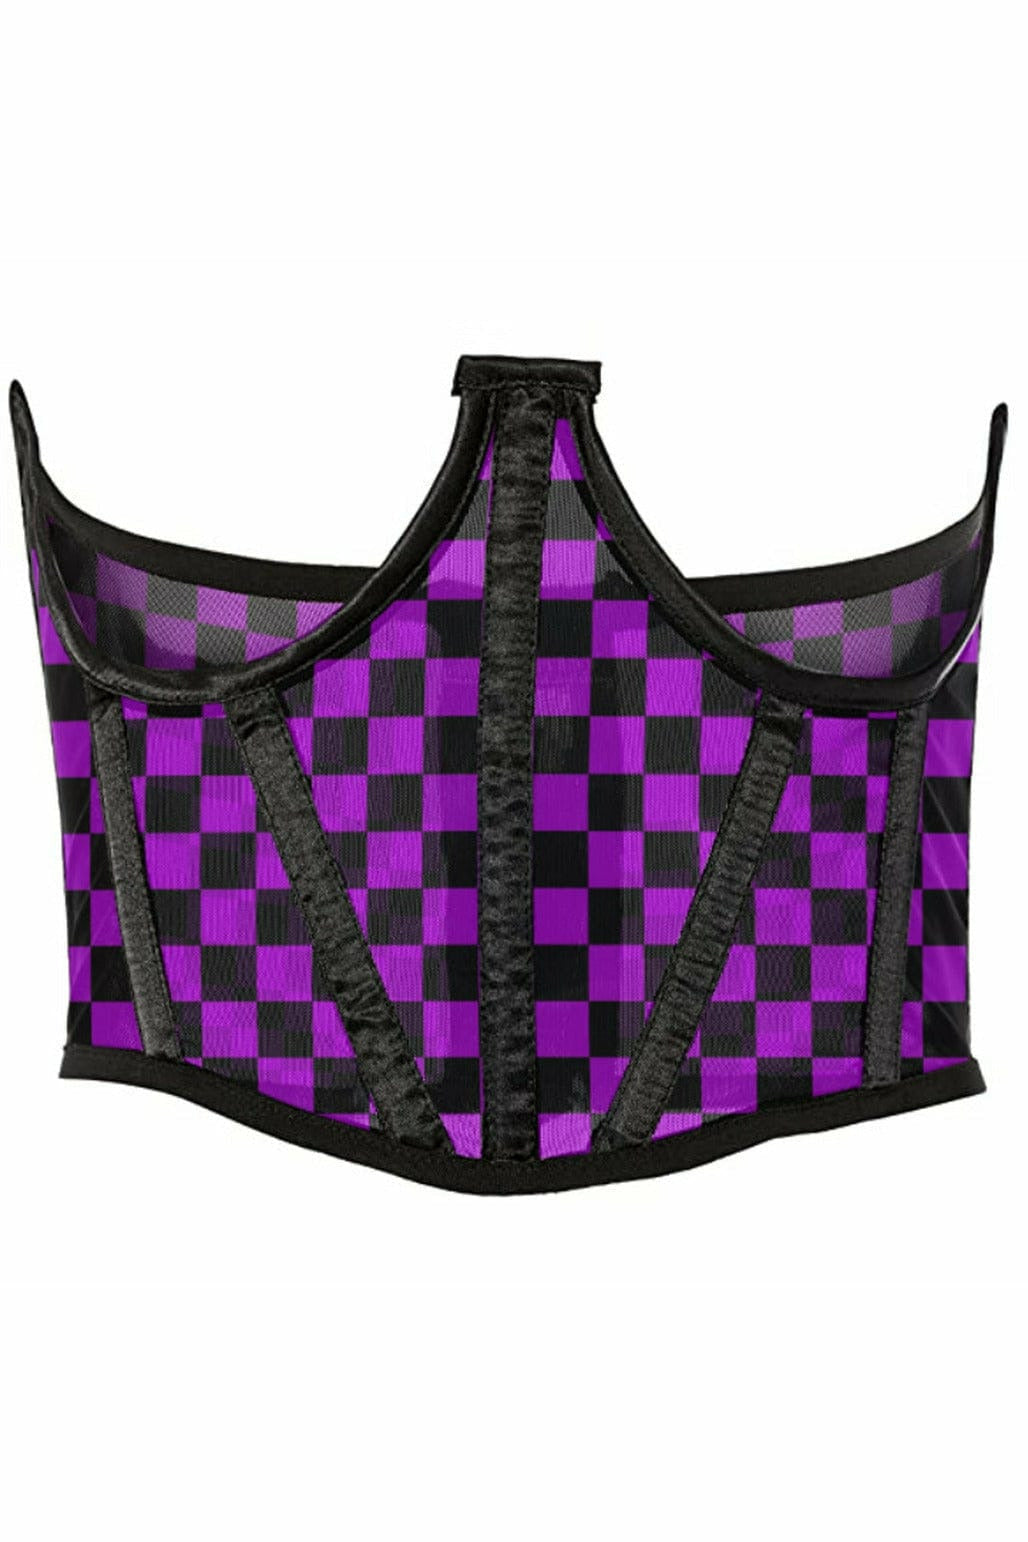 Lavish Neon Purple/Black Checker Print Mesh Open Cup Waist Cincher-Daisy Corsets